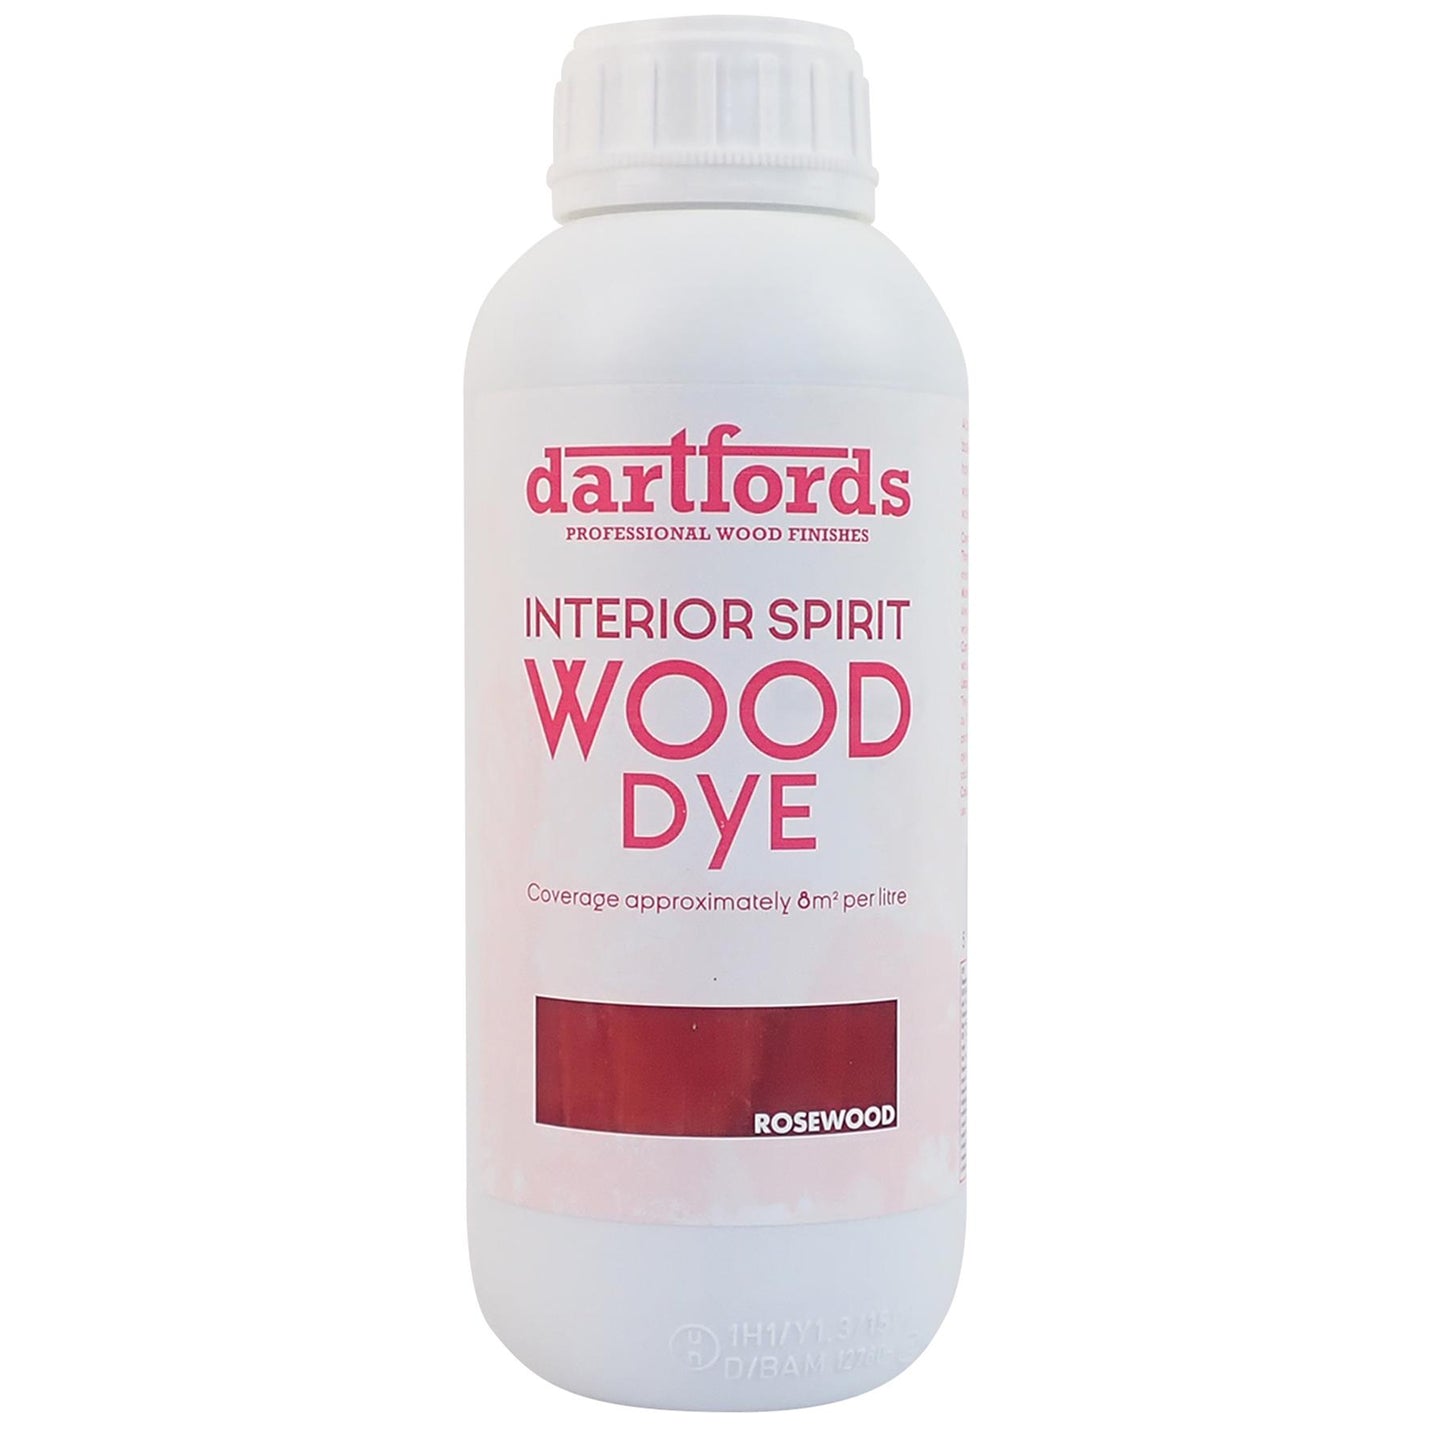 dartfords Rosewood Interior Spirit Based Wood Dye - 1 litre Tin